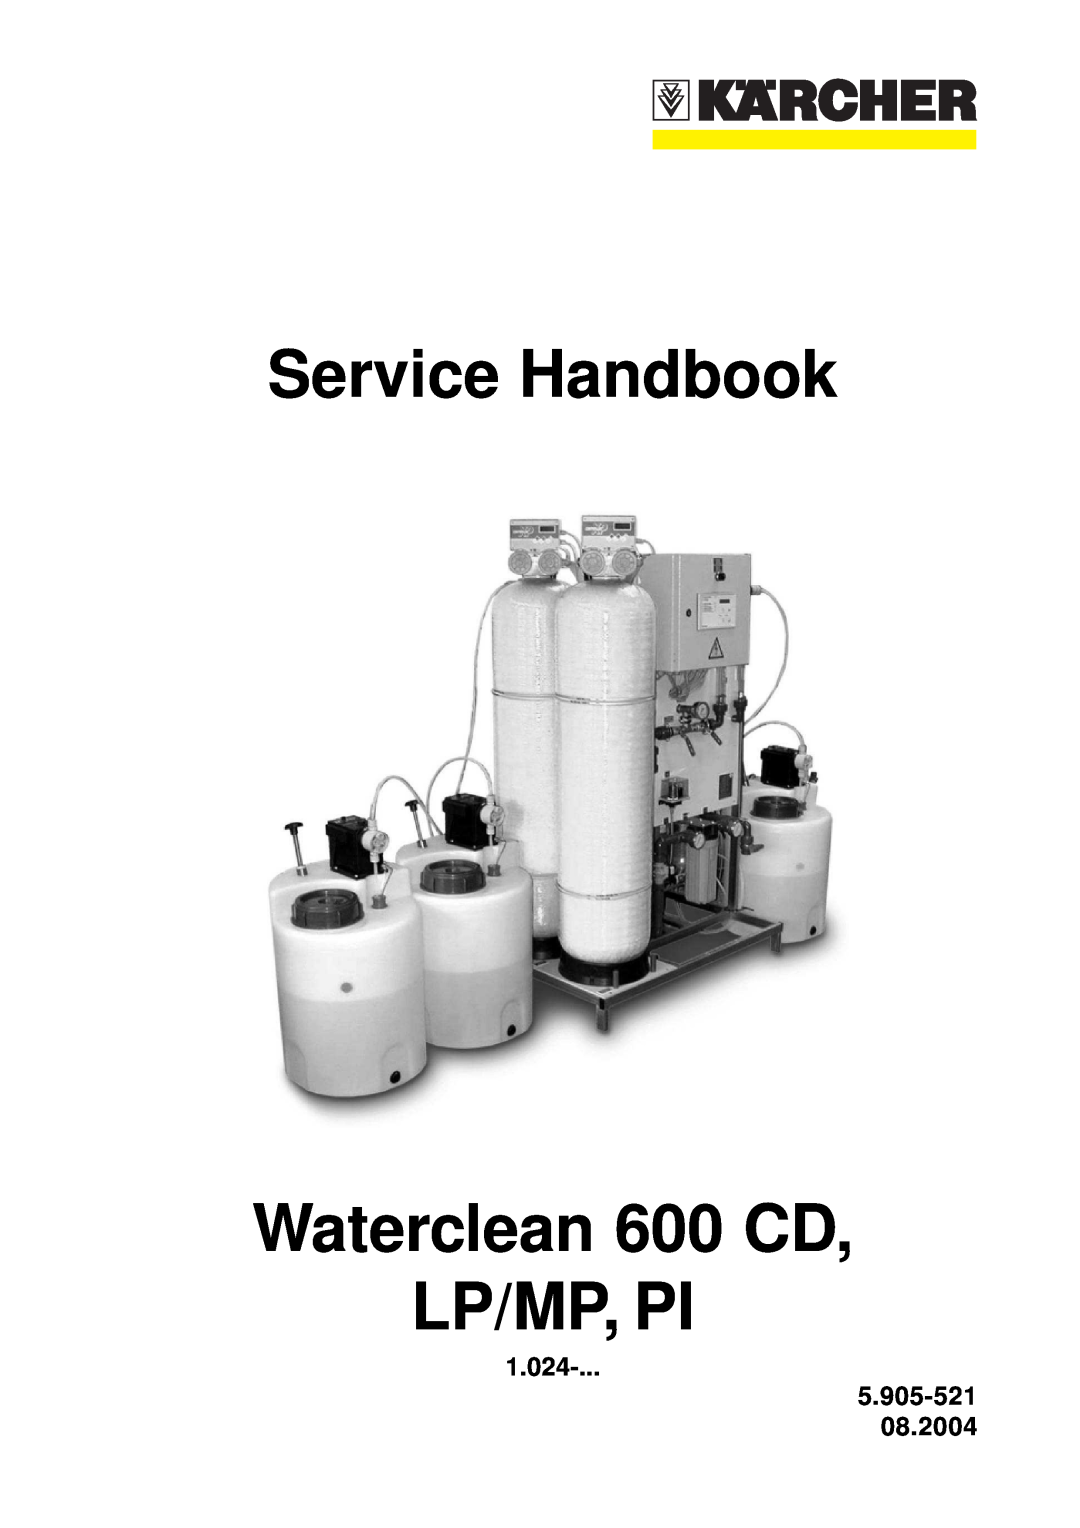 Karcher manual 1.024, Service Handbook Waterclean 600 CD LP/MP, PI 